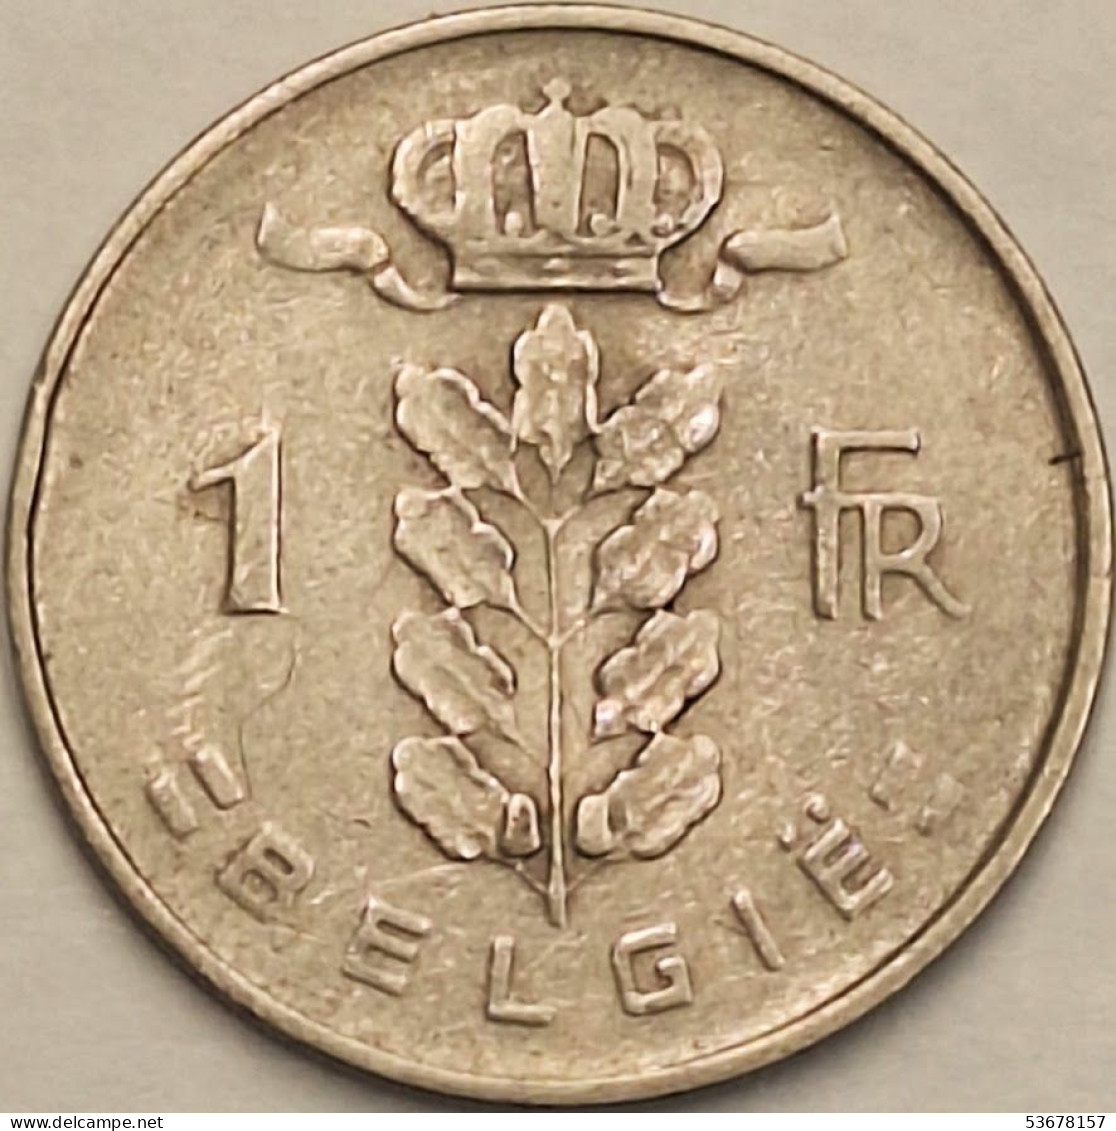 Belgium - Franc 1951, KM# 143.1 (#3124) - 1 Franc